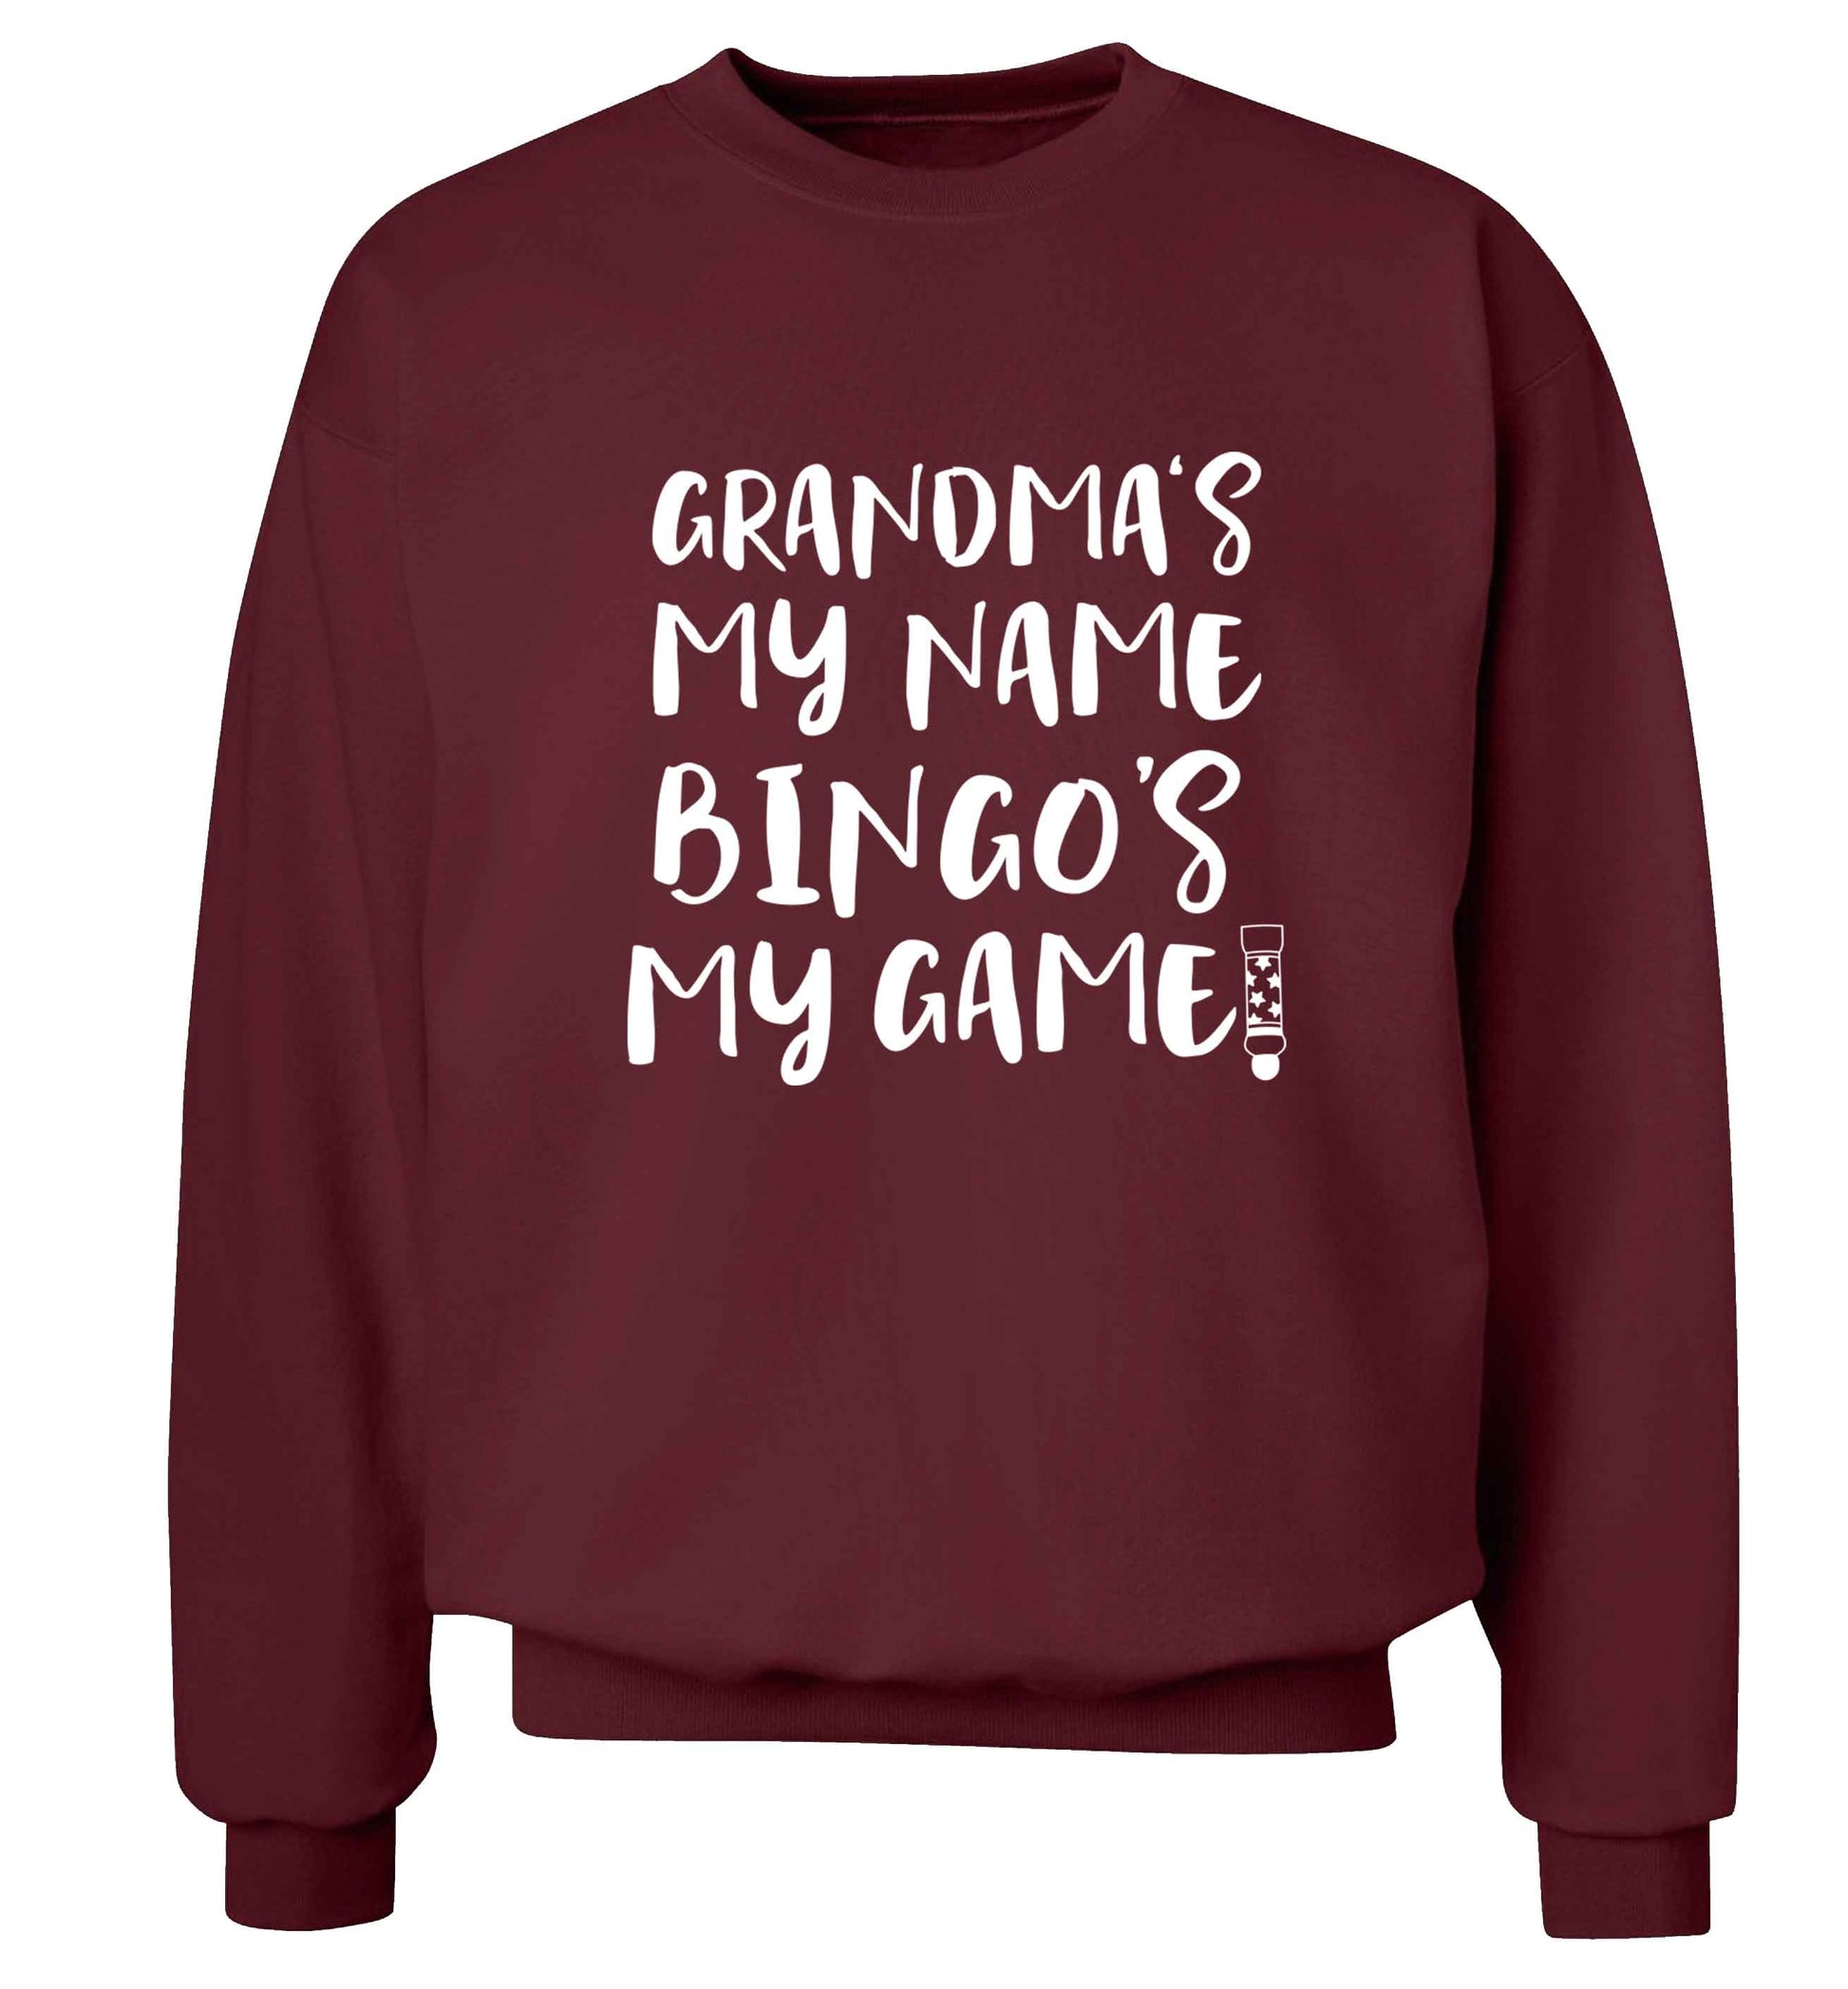 Grandma's my name bingo's my game! Adult's unisex maroon Sweater 2XL